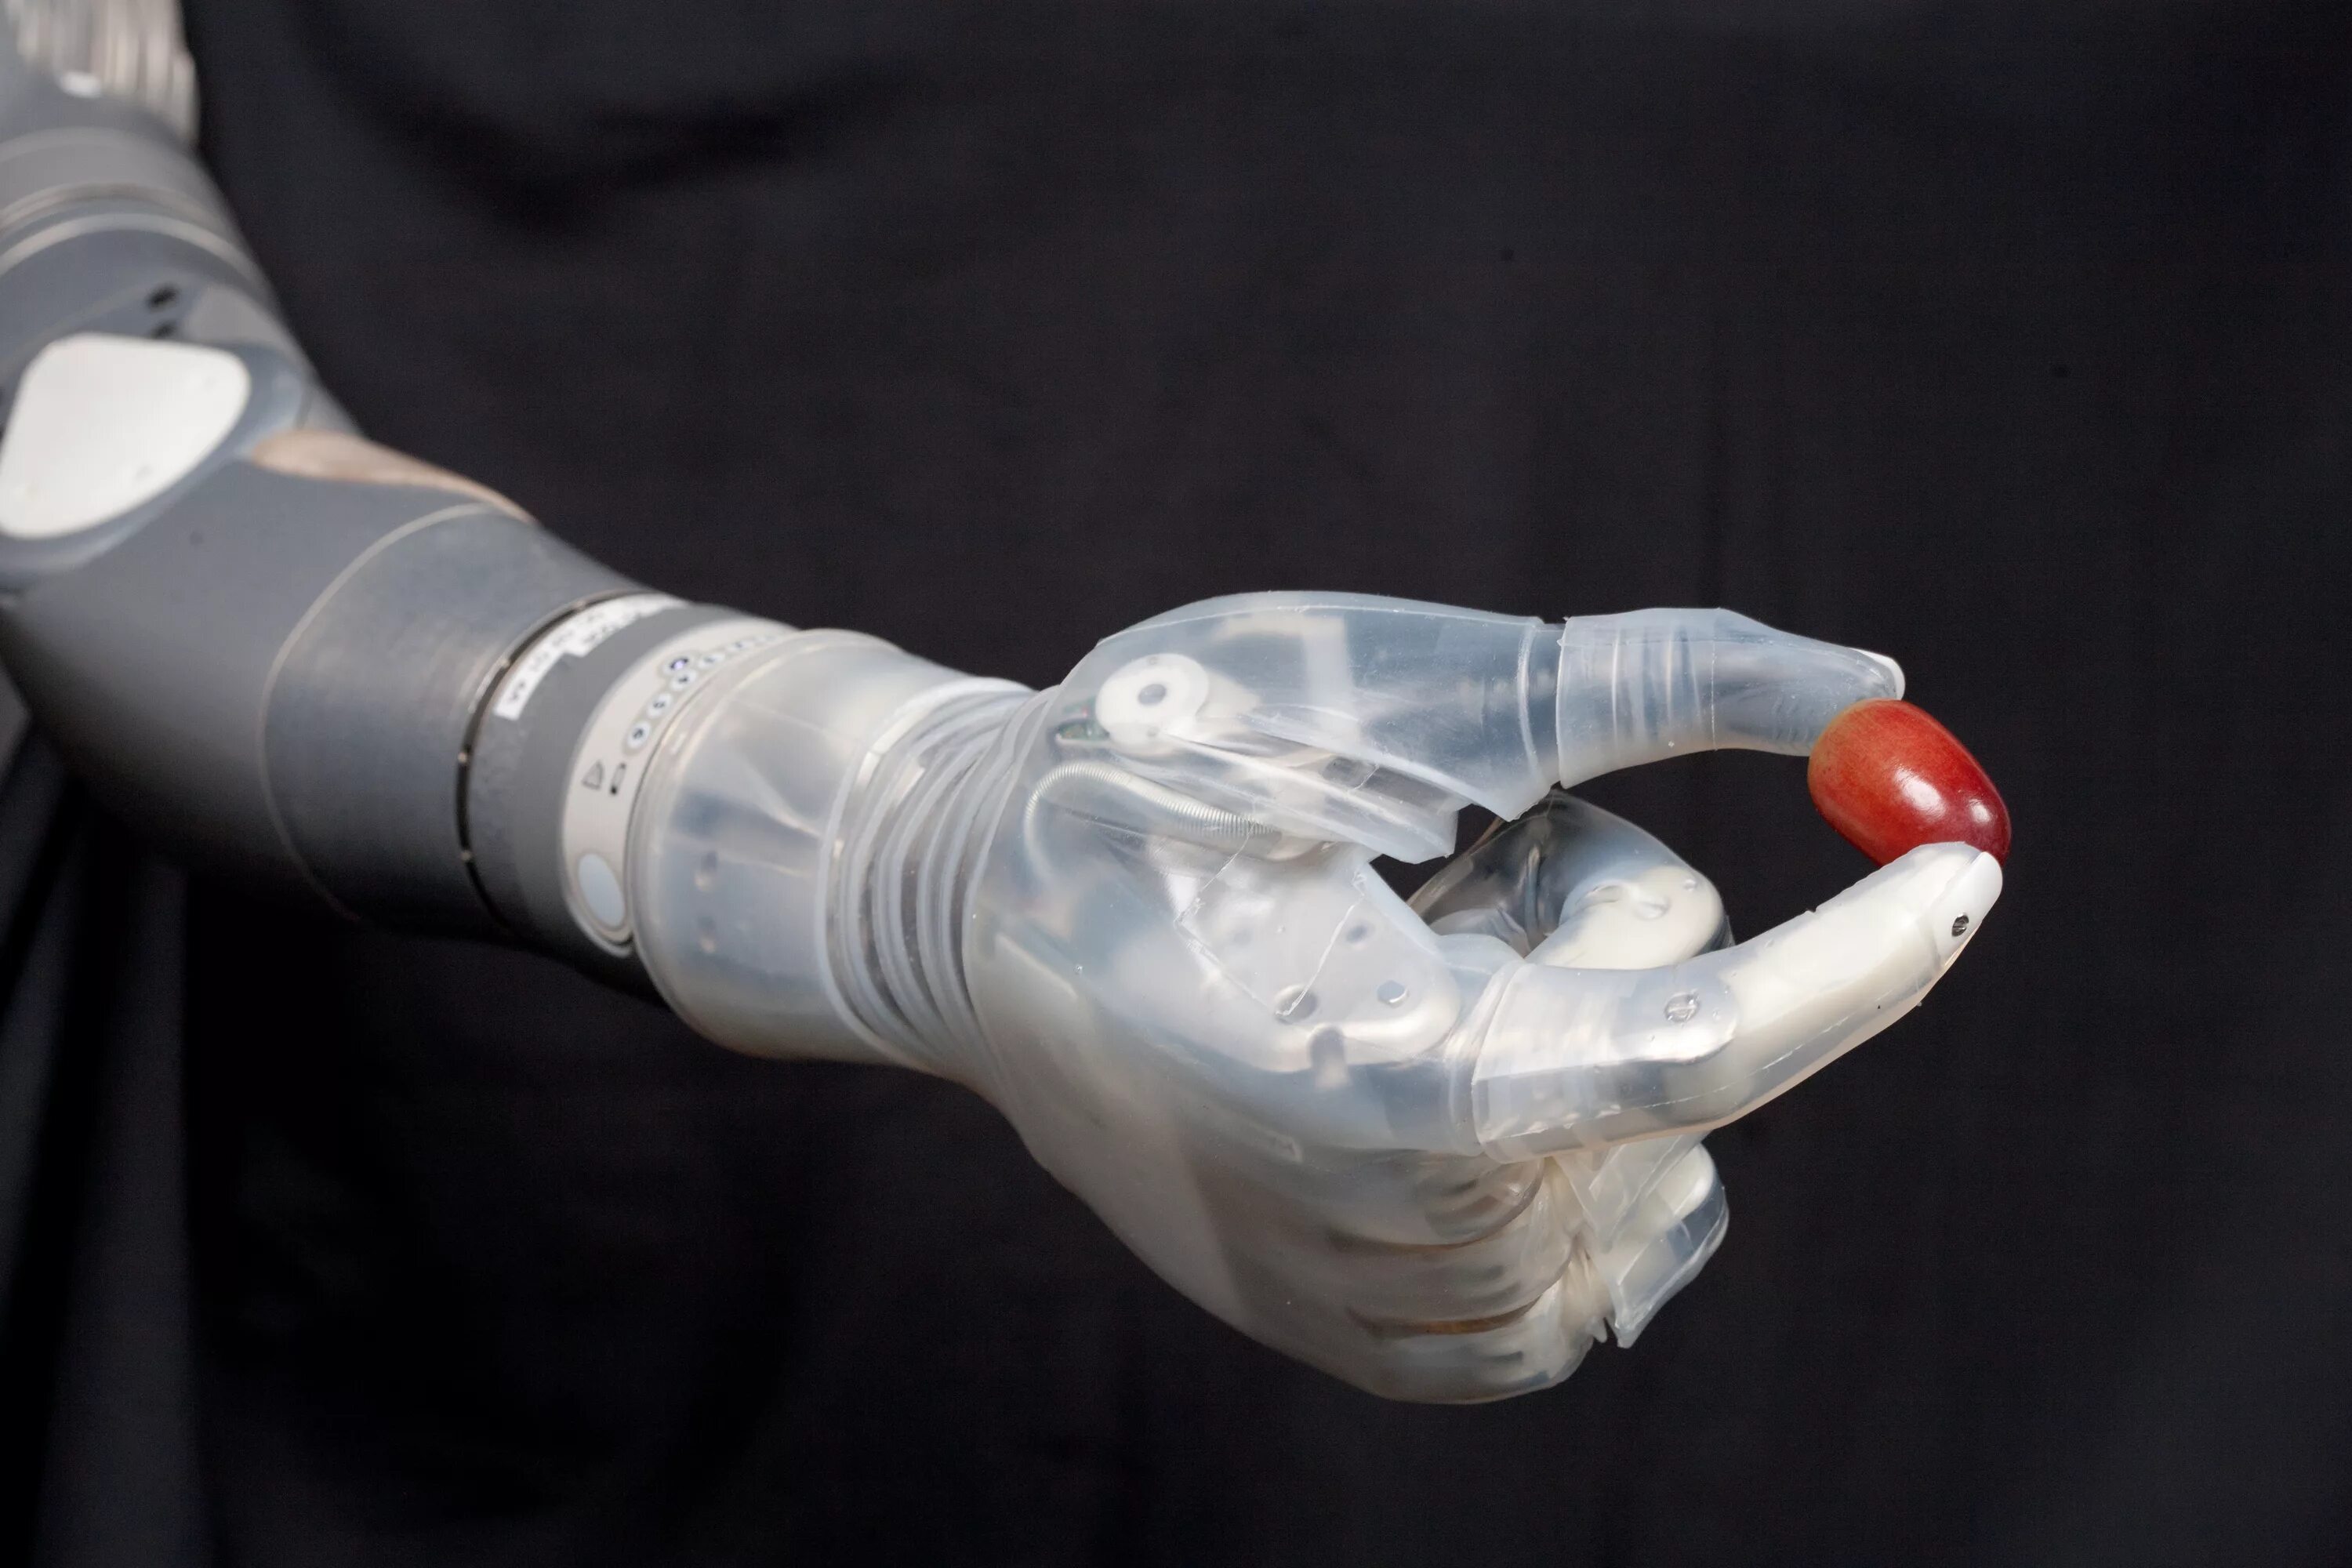 Deka Arm — 3. Протез руки Deka Arm System (DARPA). Нейробионика протезы. Luke Arm протез.